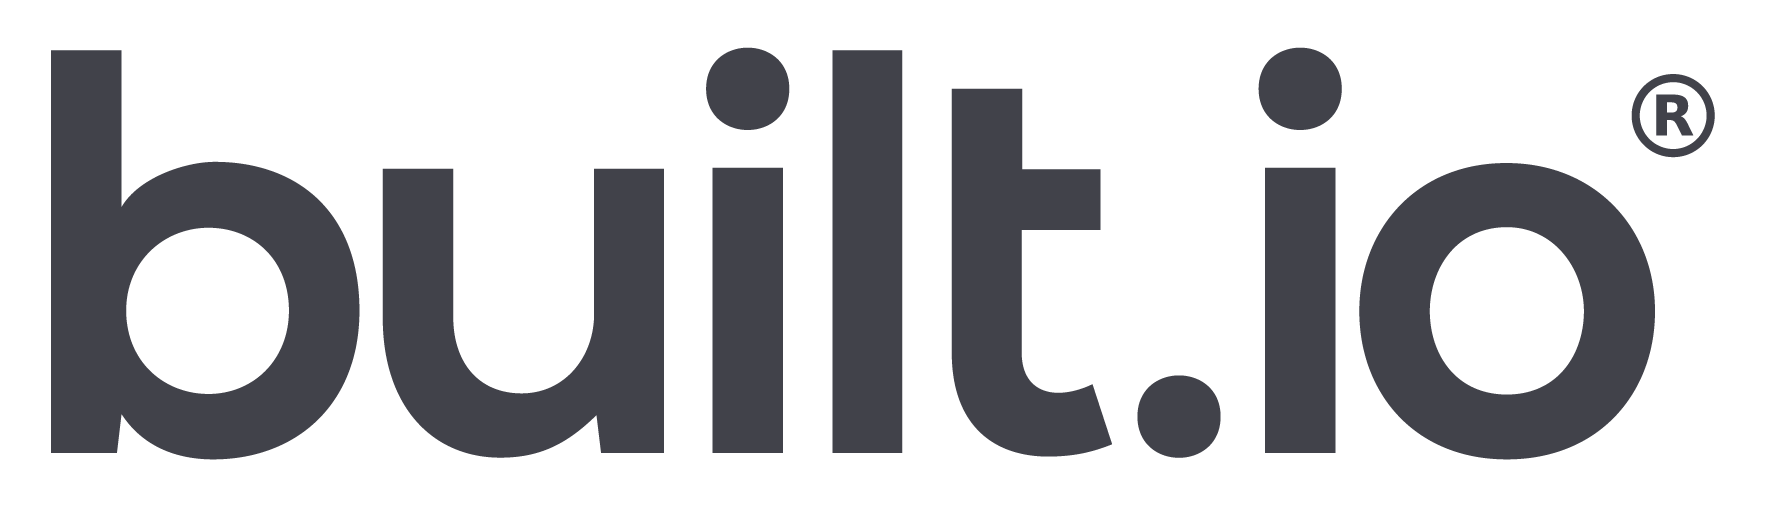 built.io logo